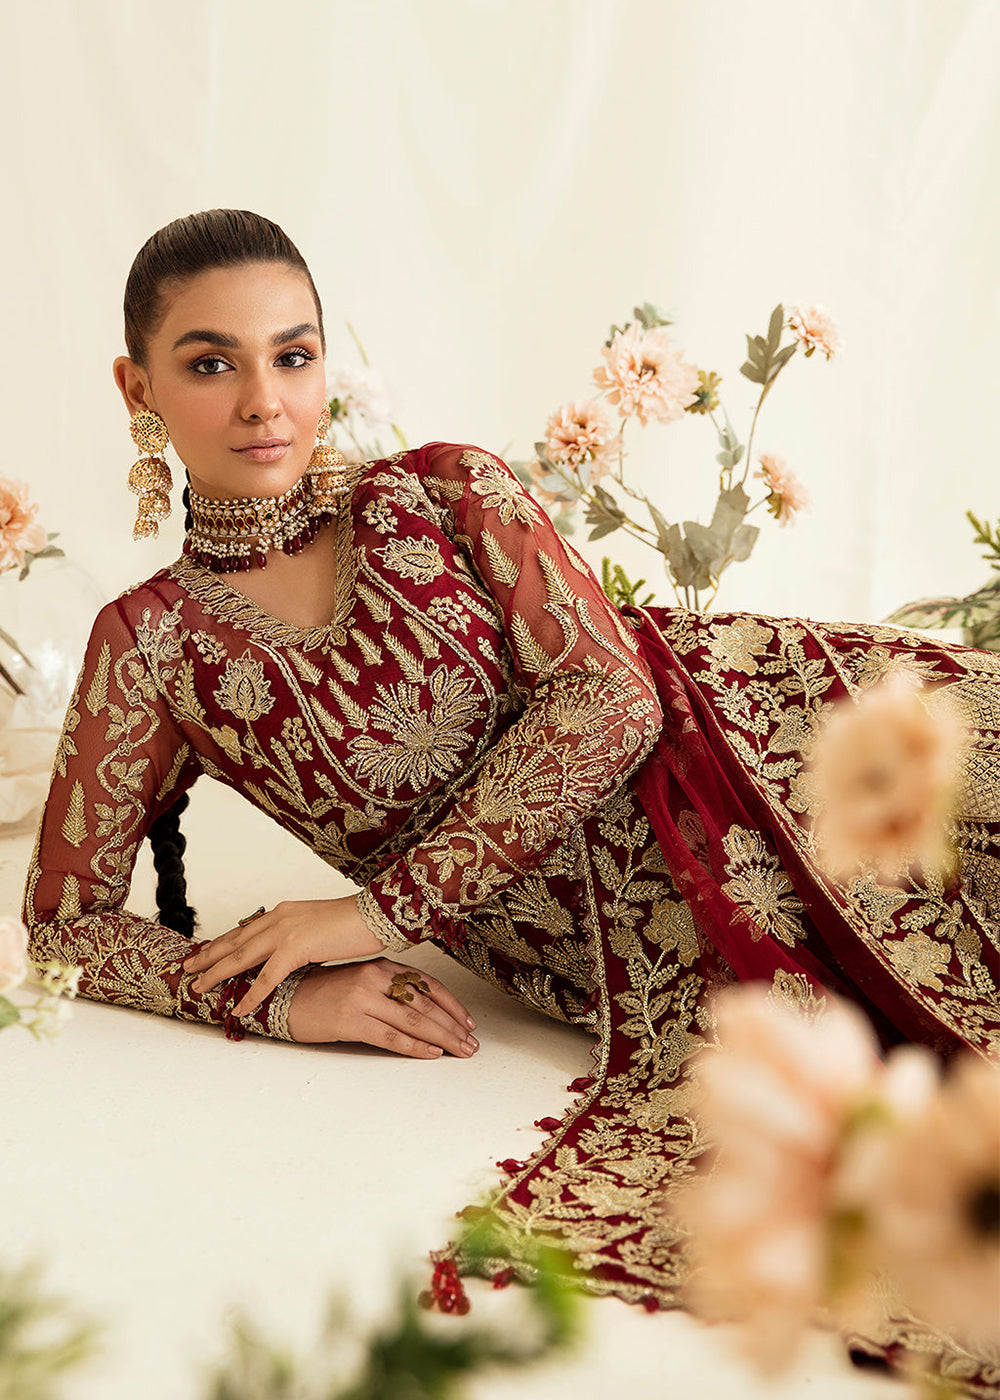 Buy Now Red Pakistani Maxi Dress | Ayzel | Fleur De Lis Formals’23 | Tresor Online in USA, UK, Canada & Worldwide at Empress Clothing.